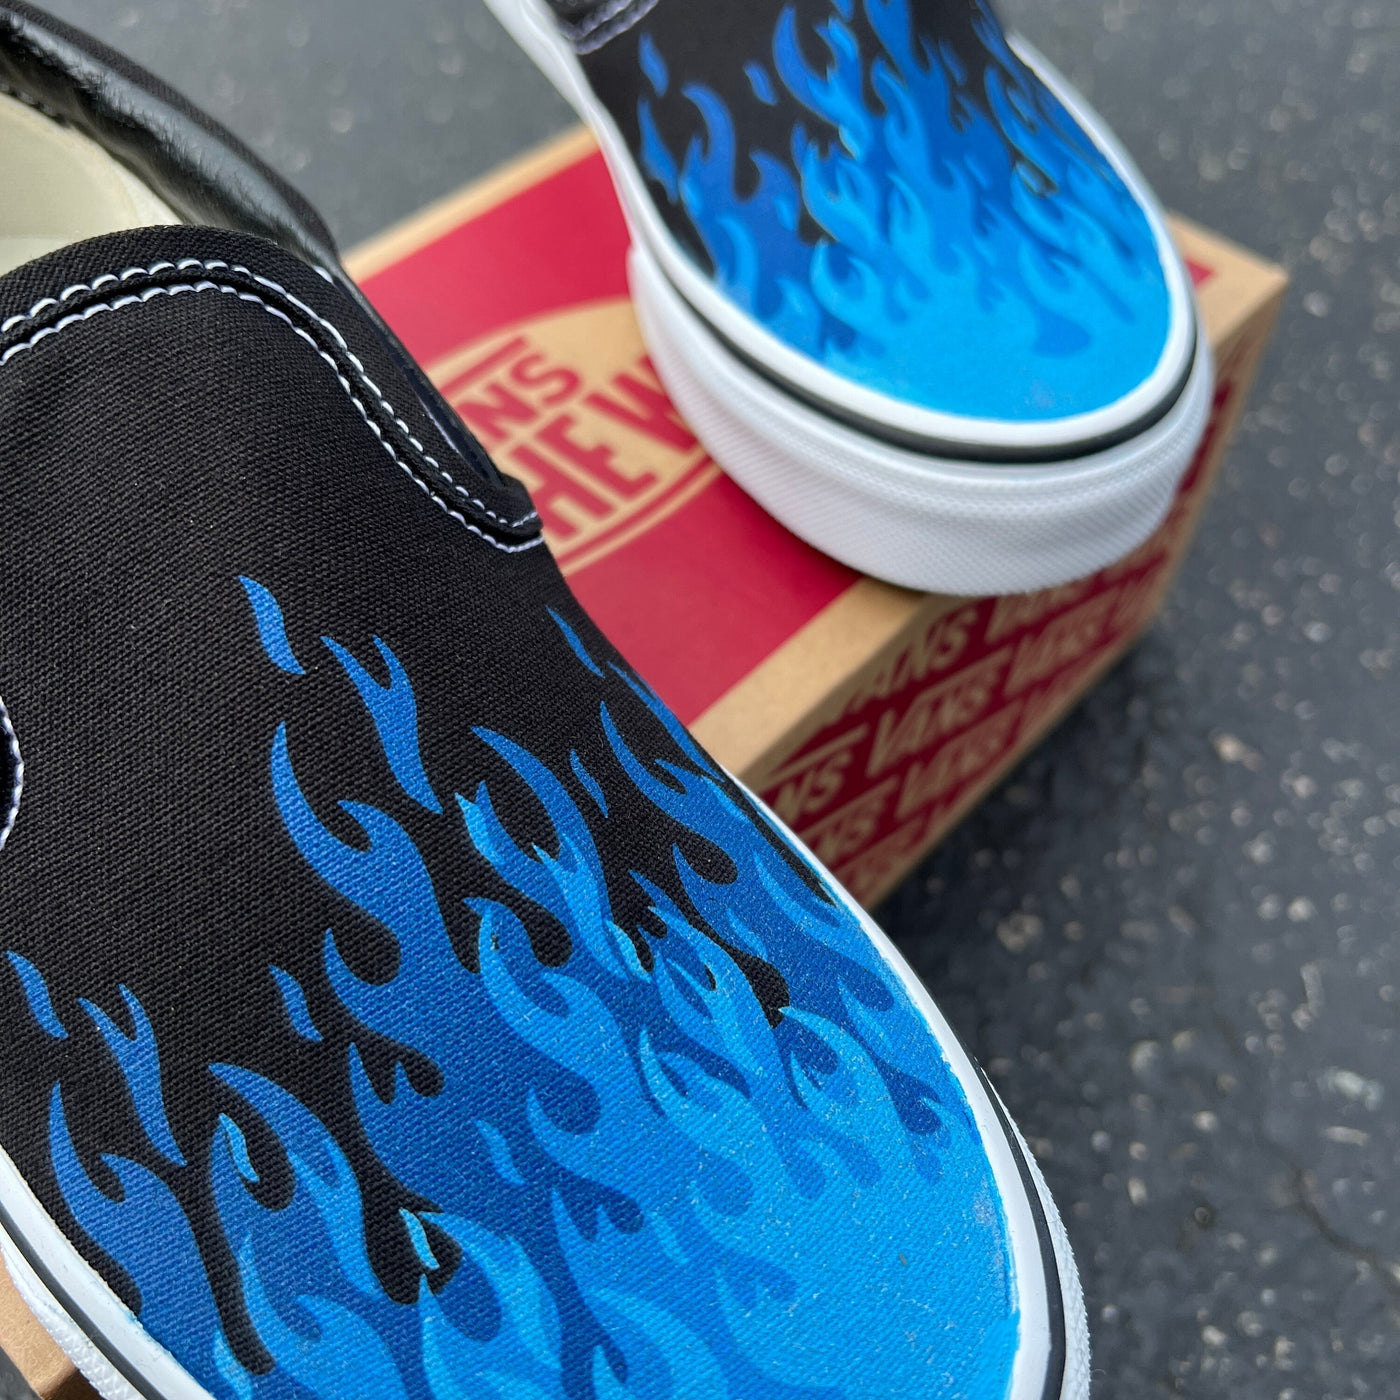 Hot Blue Flame Shoes, Custom Vans Black Slip On Dark Blue Neon